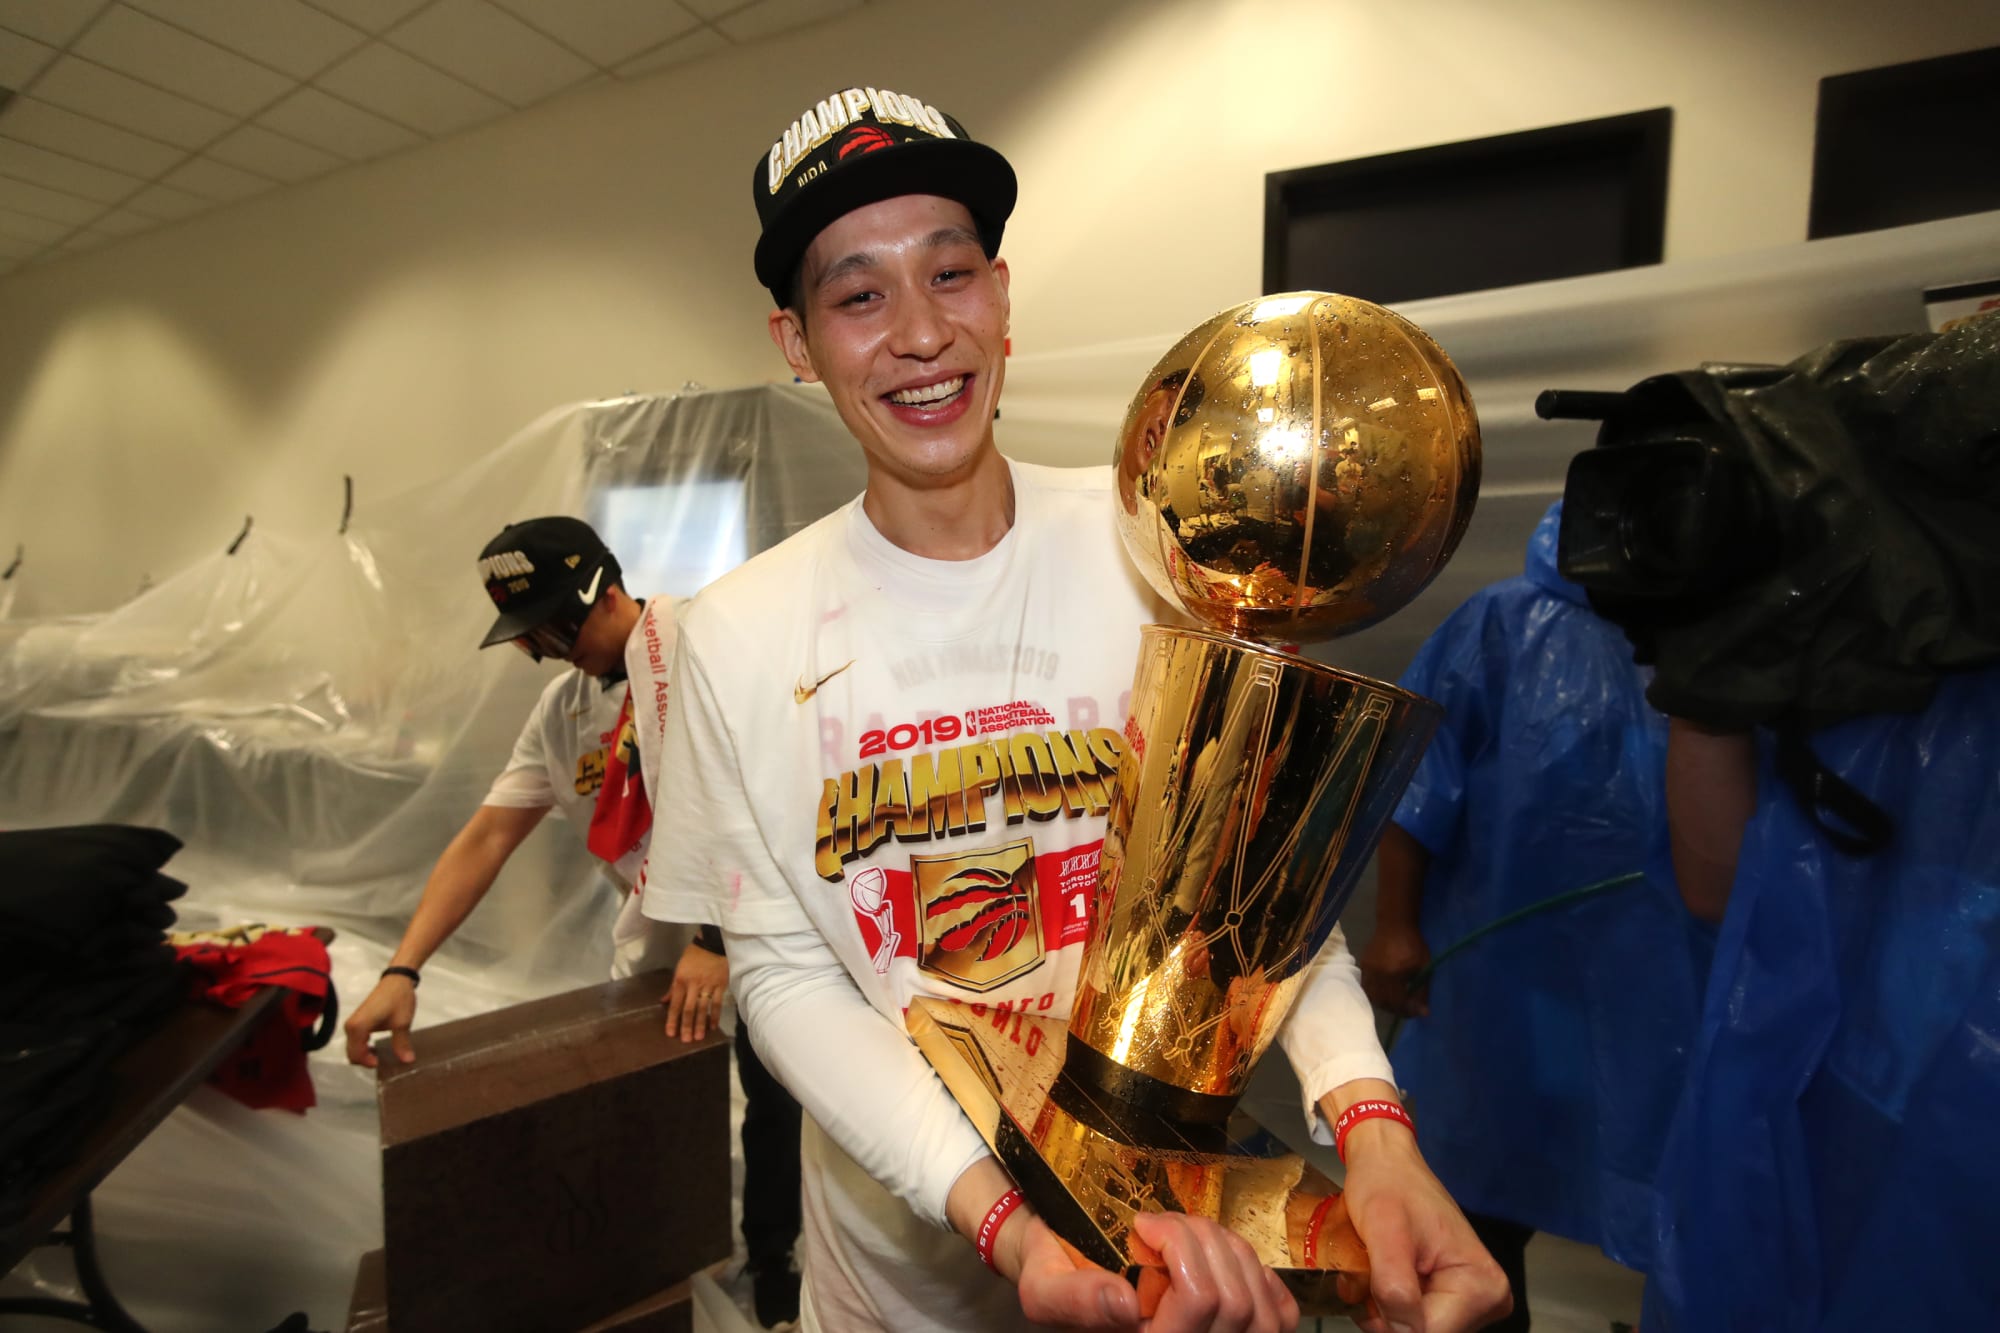 Jeremy Lin - Toronto Raptors Guard - ESPN